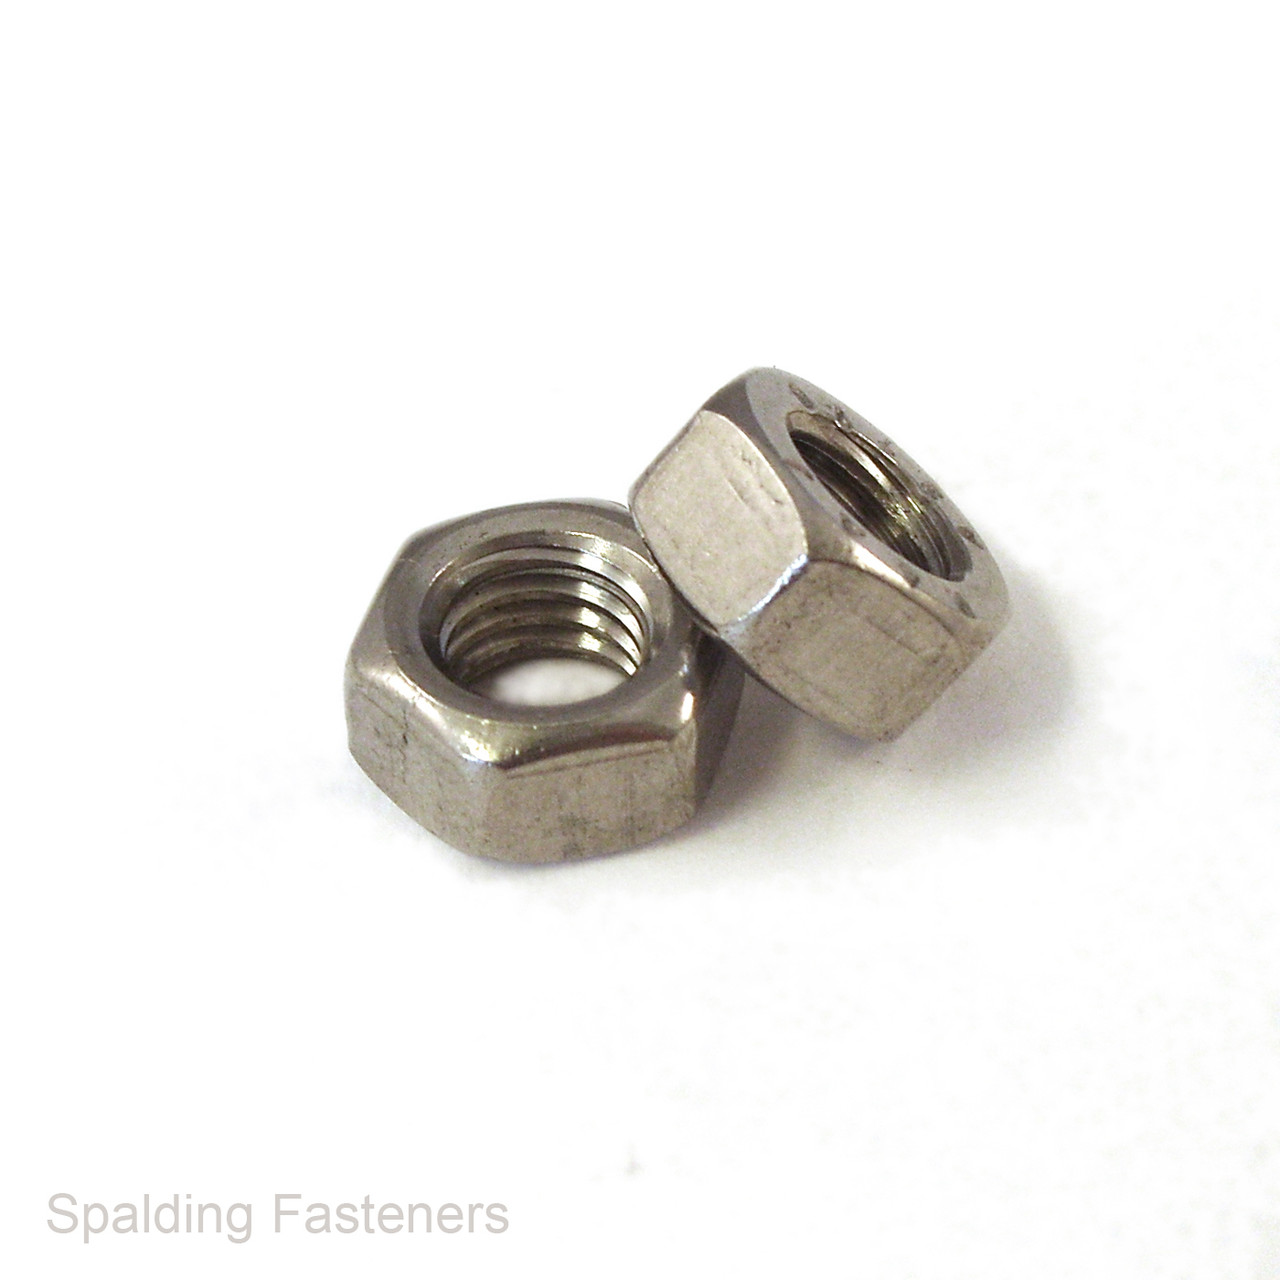 Assorted Metric Stainless Steel Allen Key Socket Button Head Screws & Full Nuts